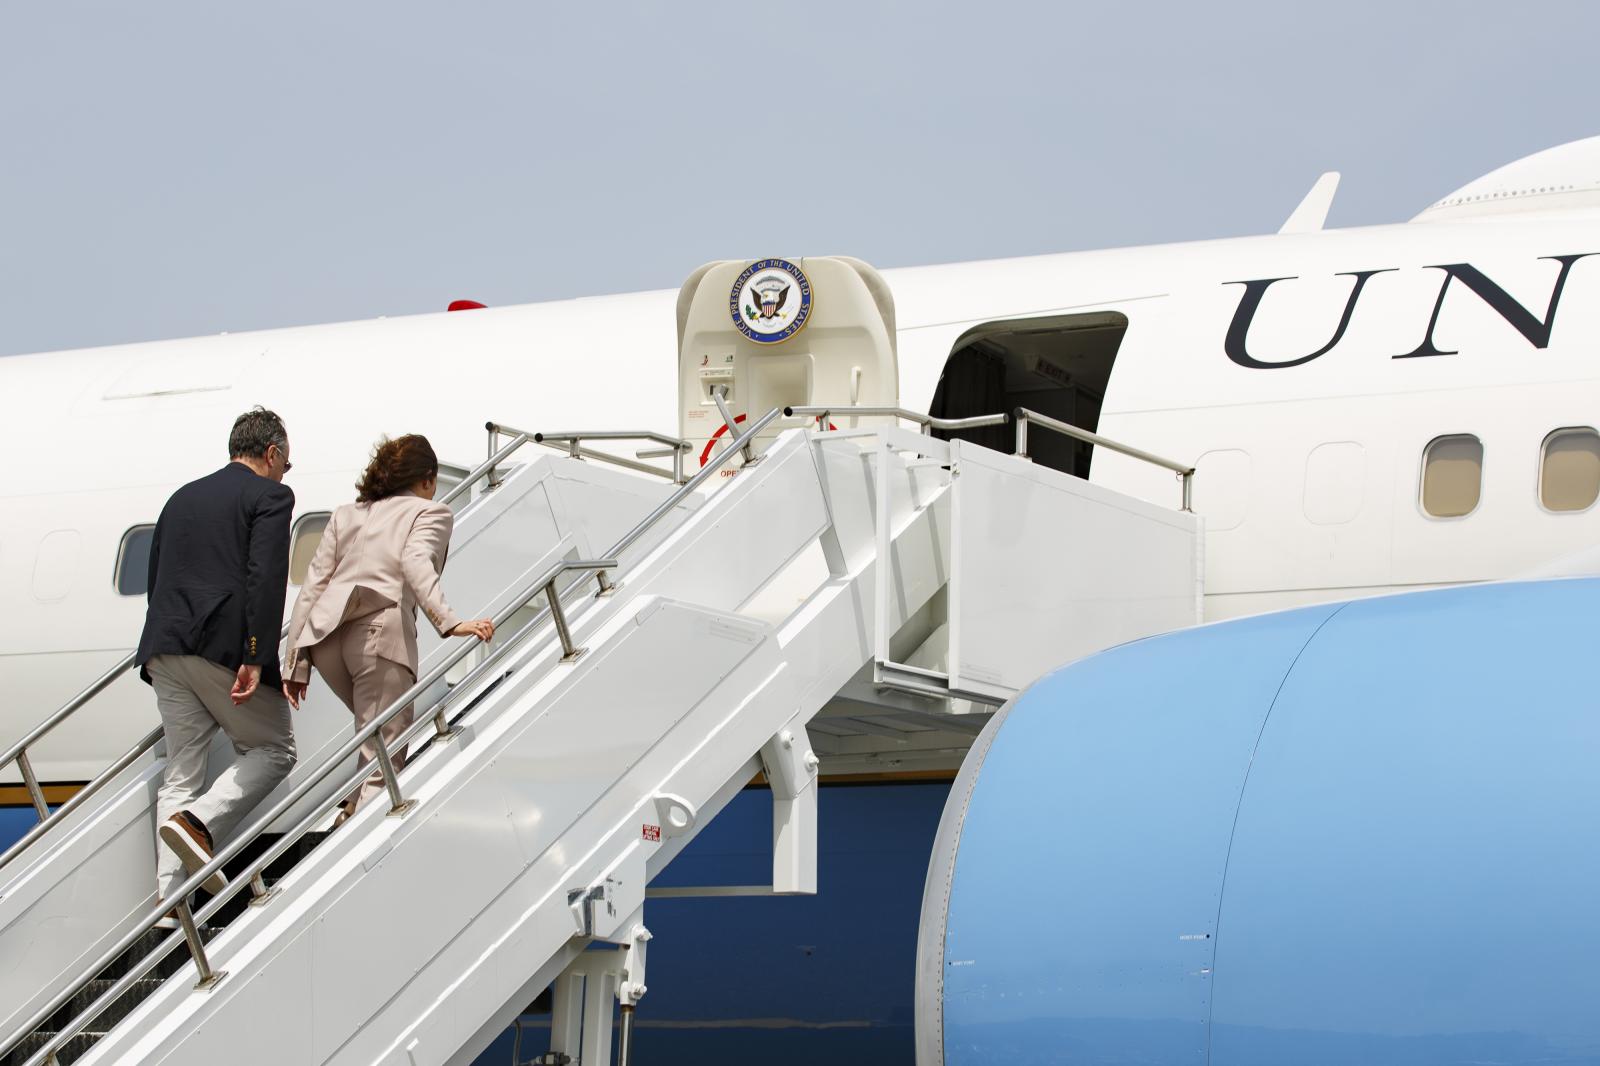 Image from U.S. Vice President Kamala Harris Visit To Ghana - U.S. Vice President Kamala Harris and Second Gentleman...